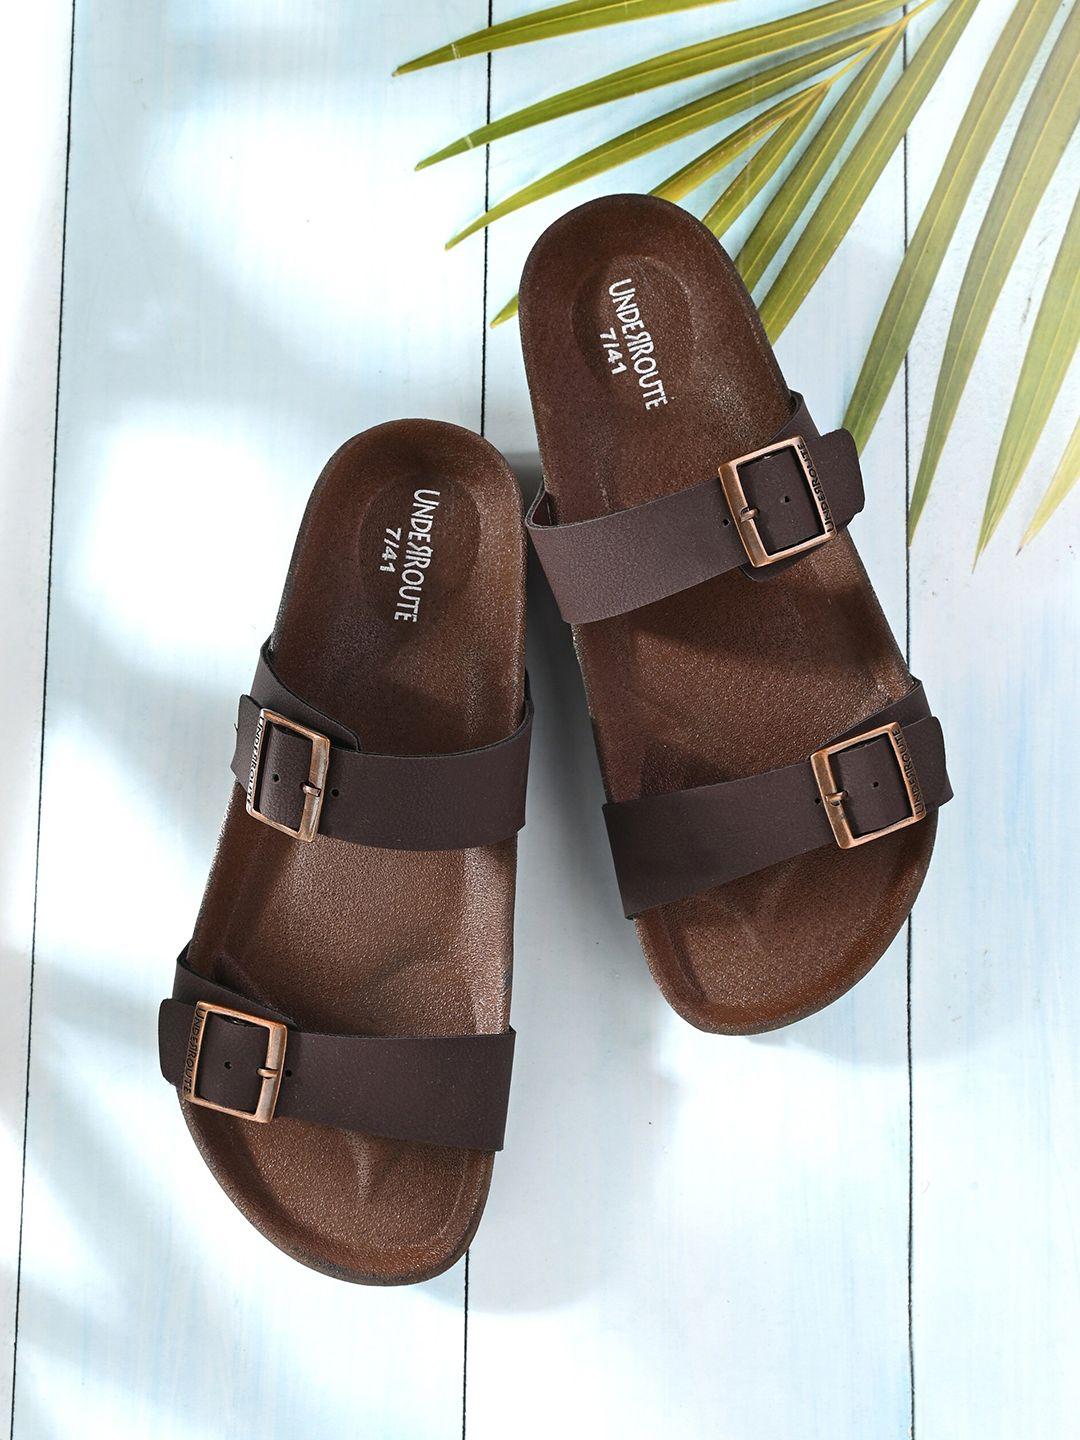 underroute-men-two-strap-open-toe-comfort-sandals-with-buckle-detail